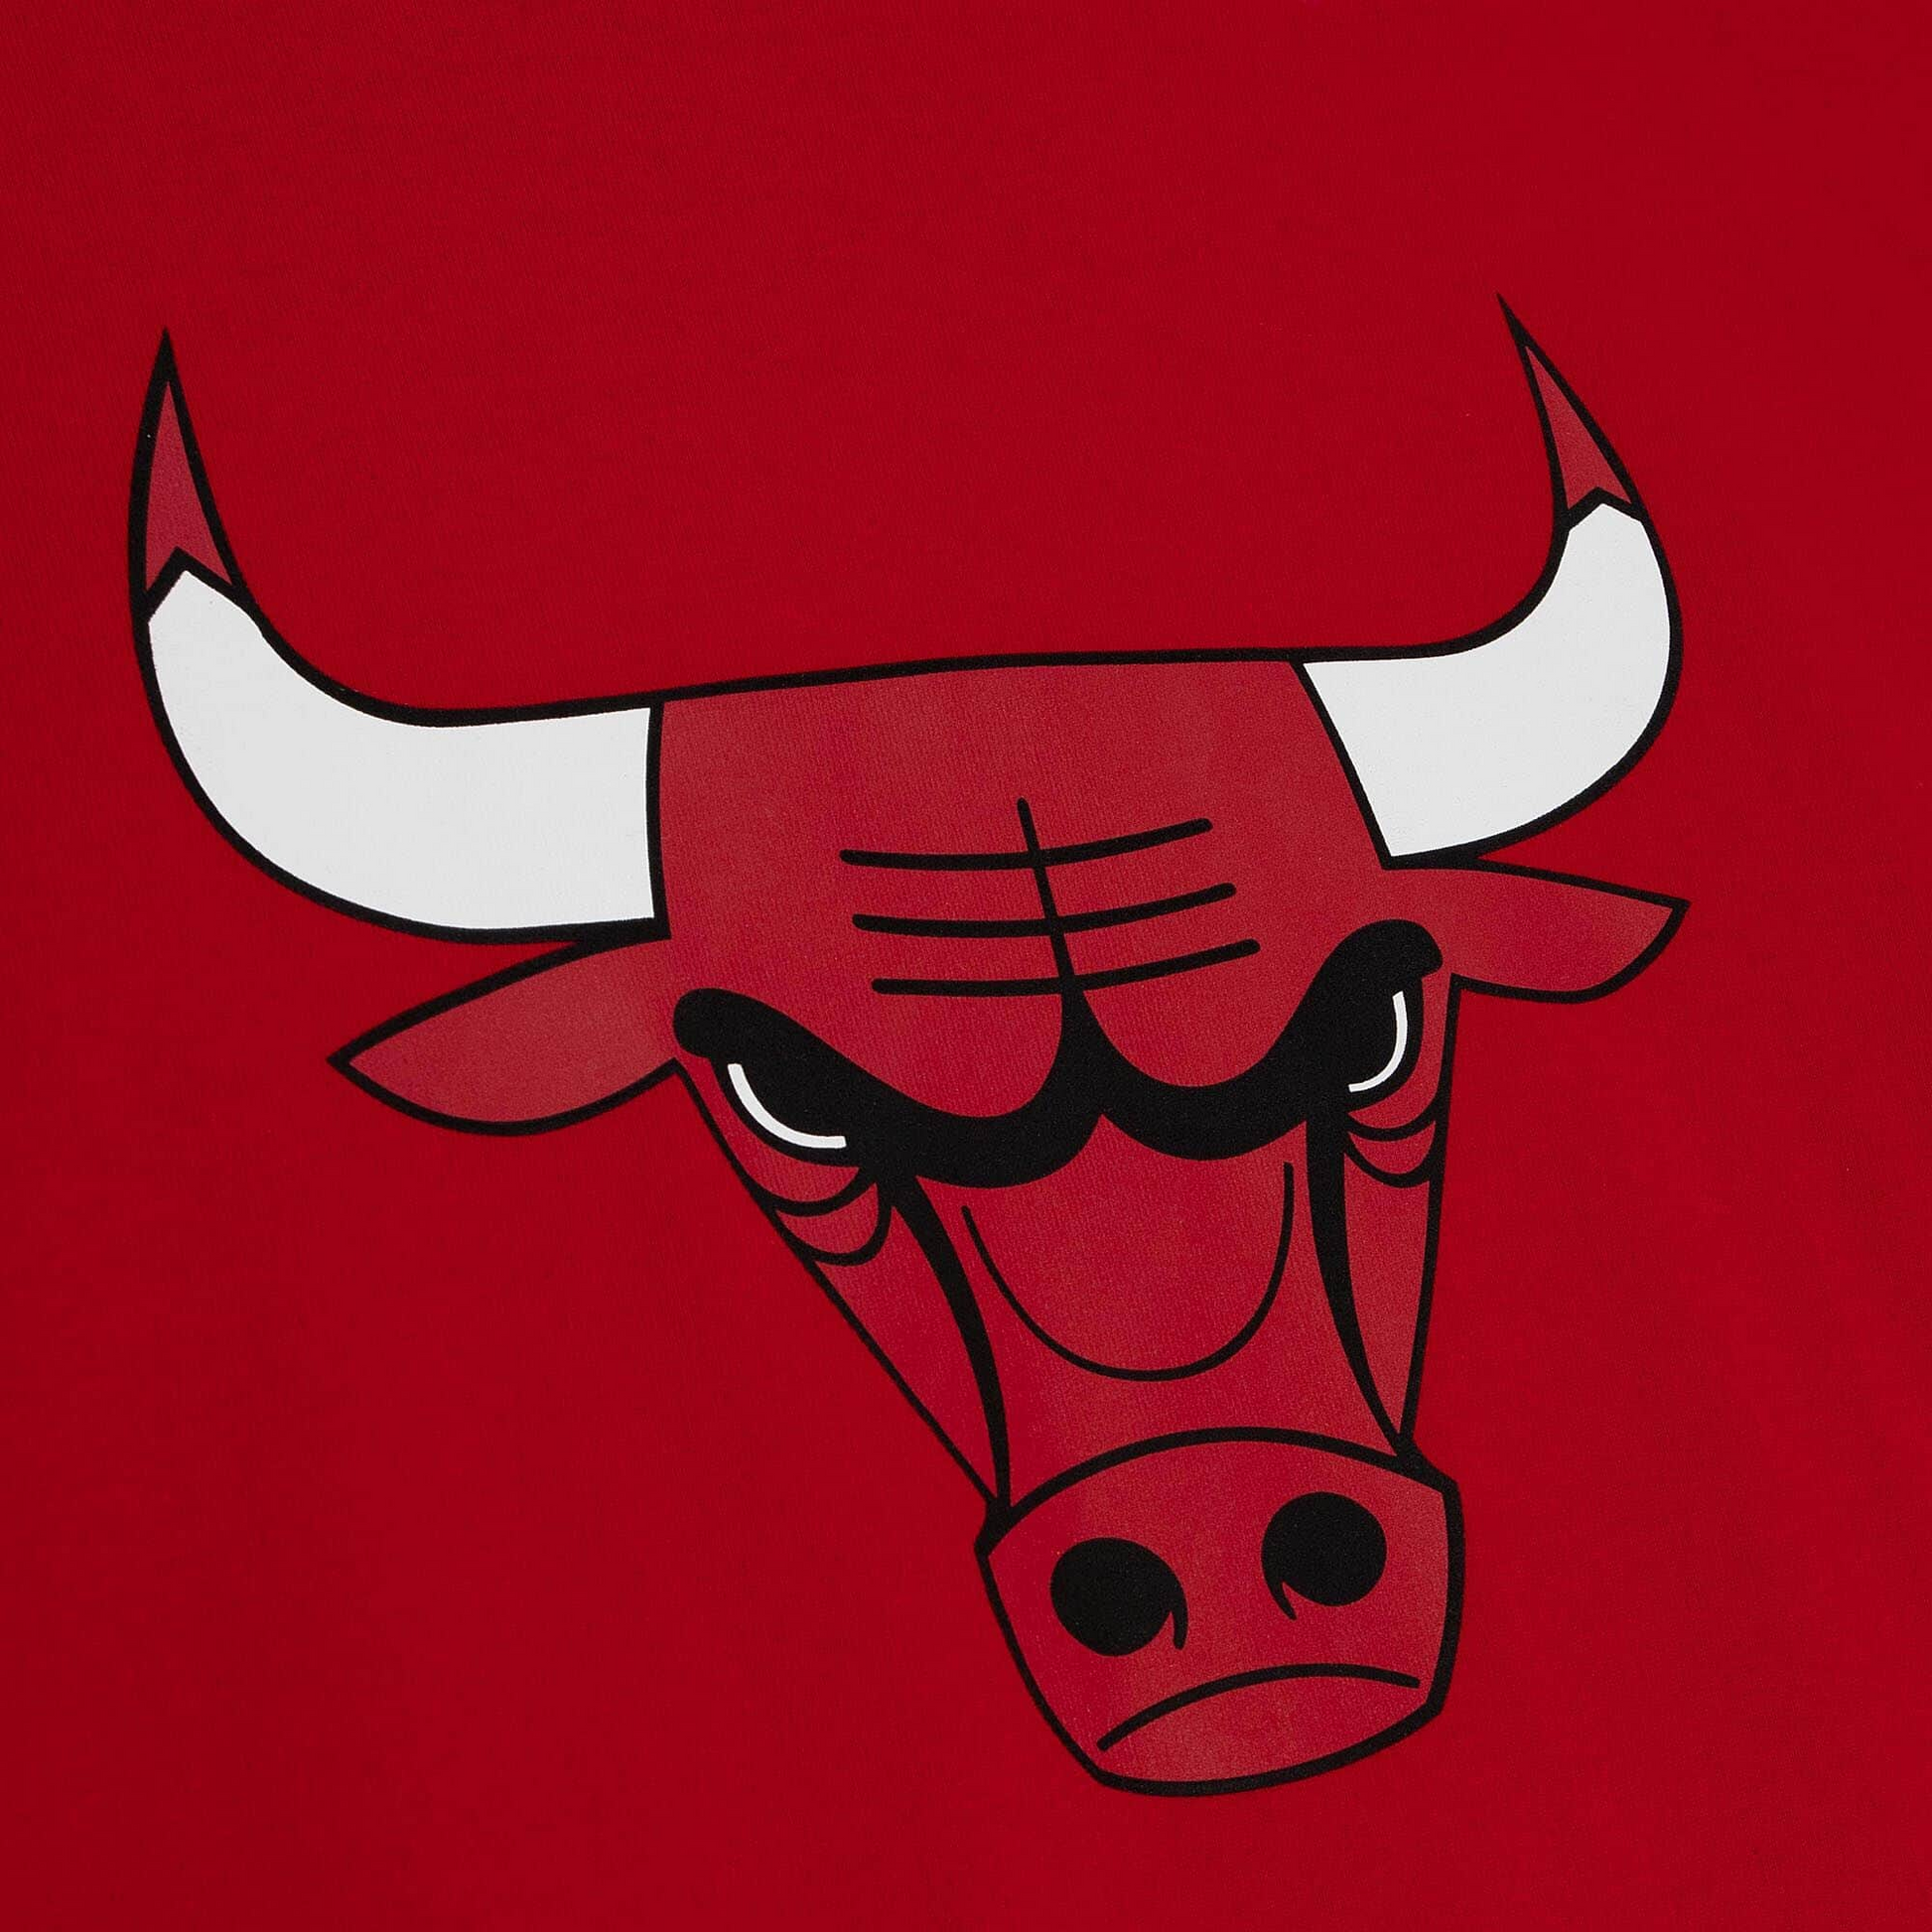 Chicago Bulls T-Shirts in Chicago Bulls Team Shop 